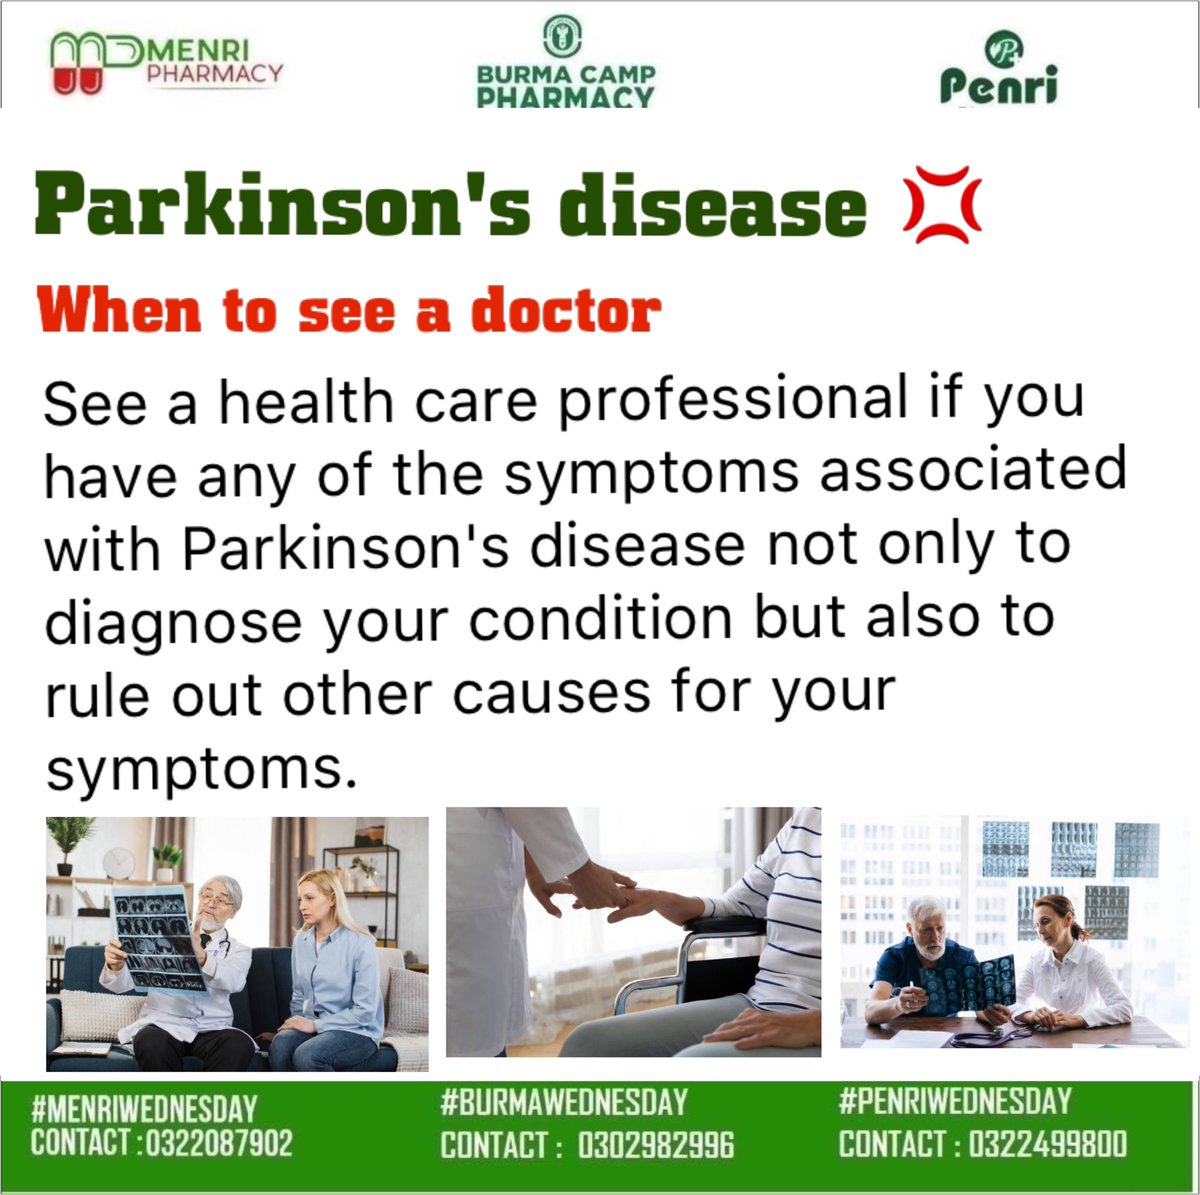 Menri Wednesday 

#ParkinsonsDisease